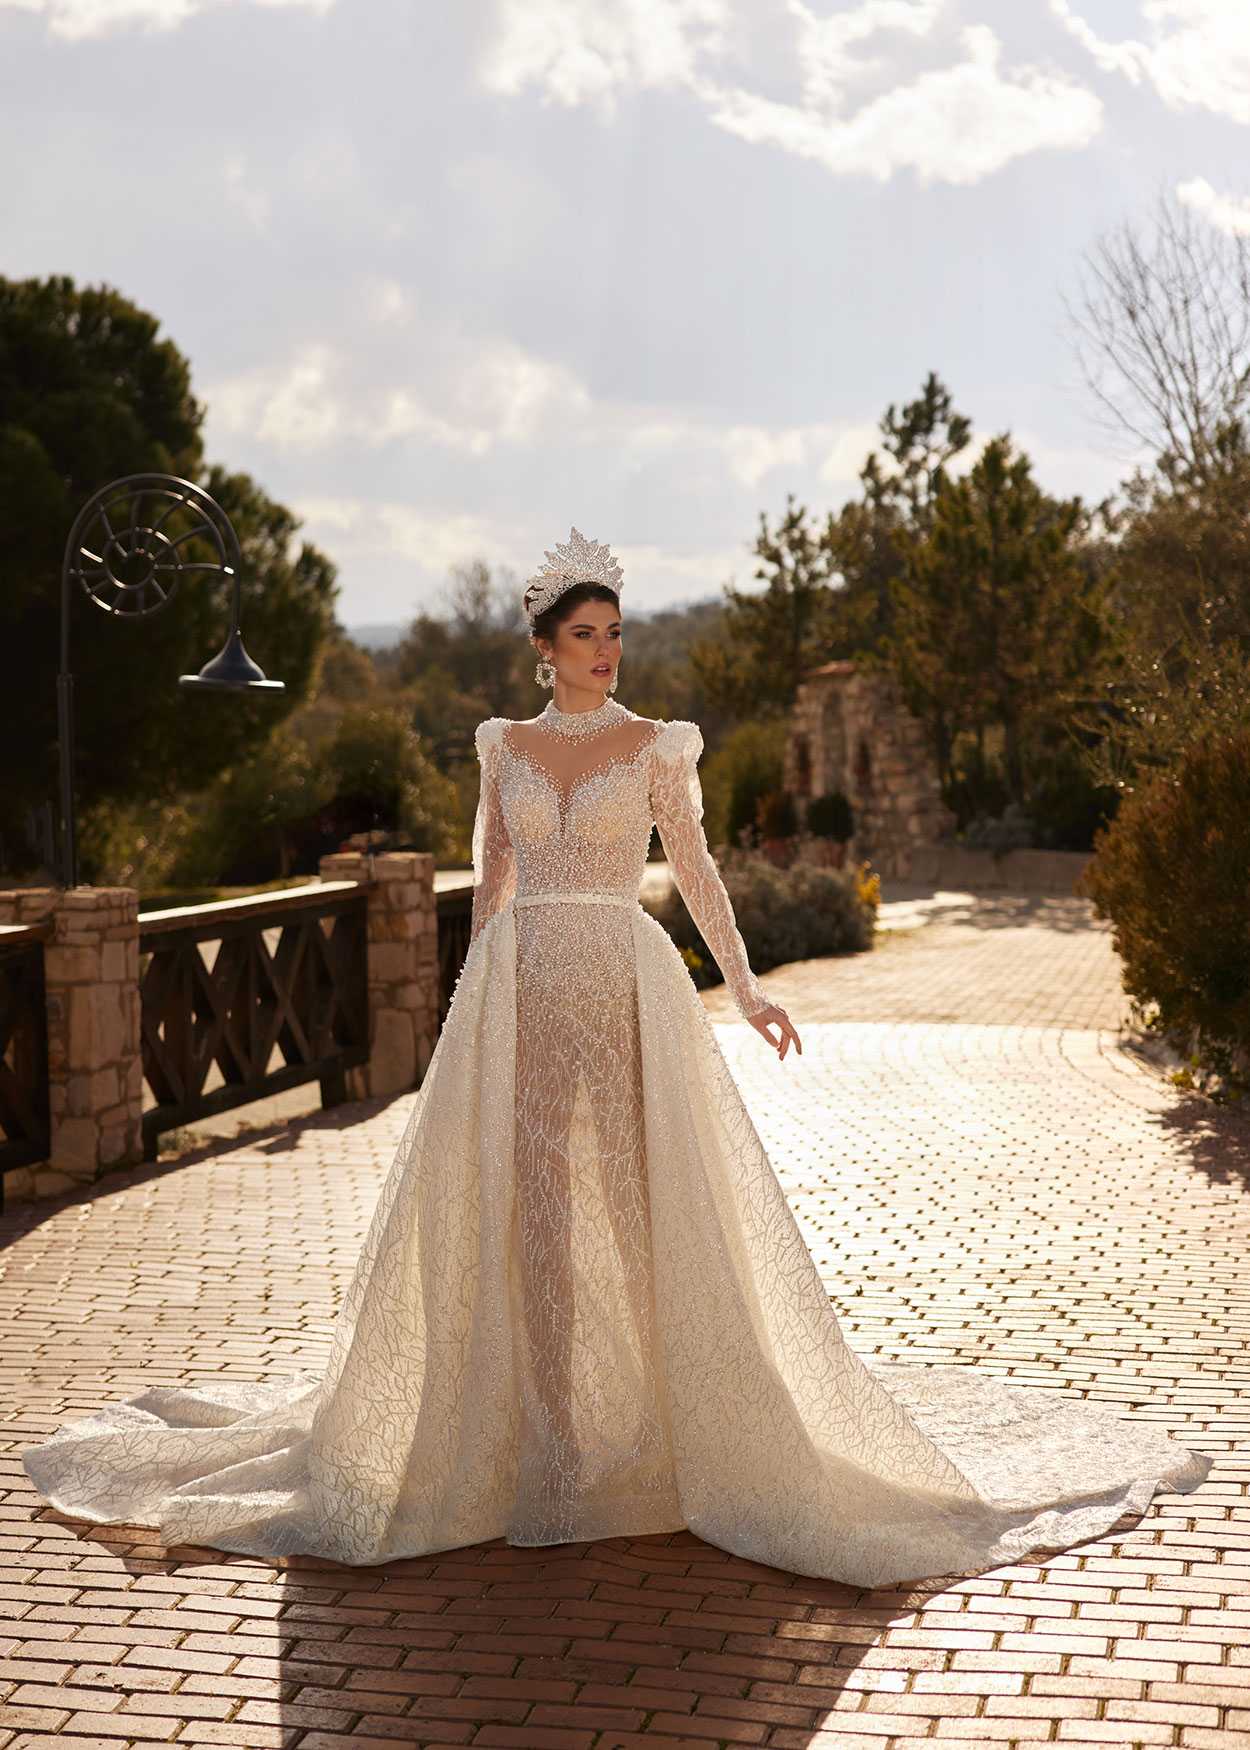 buy Sparkly Wedding Dress With Detachable royal Train bridal dresses online